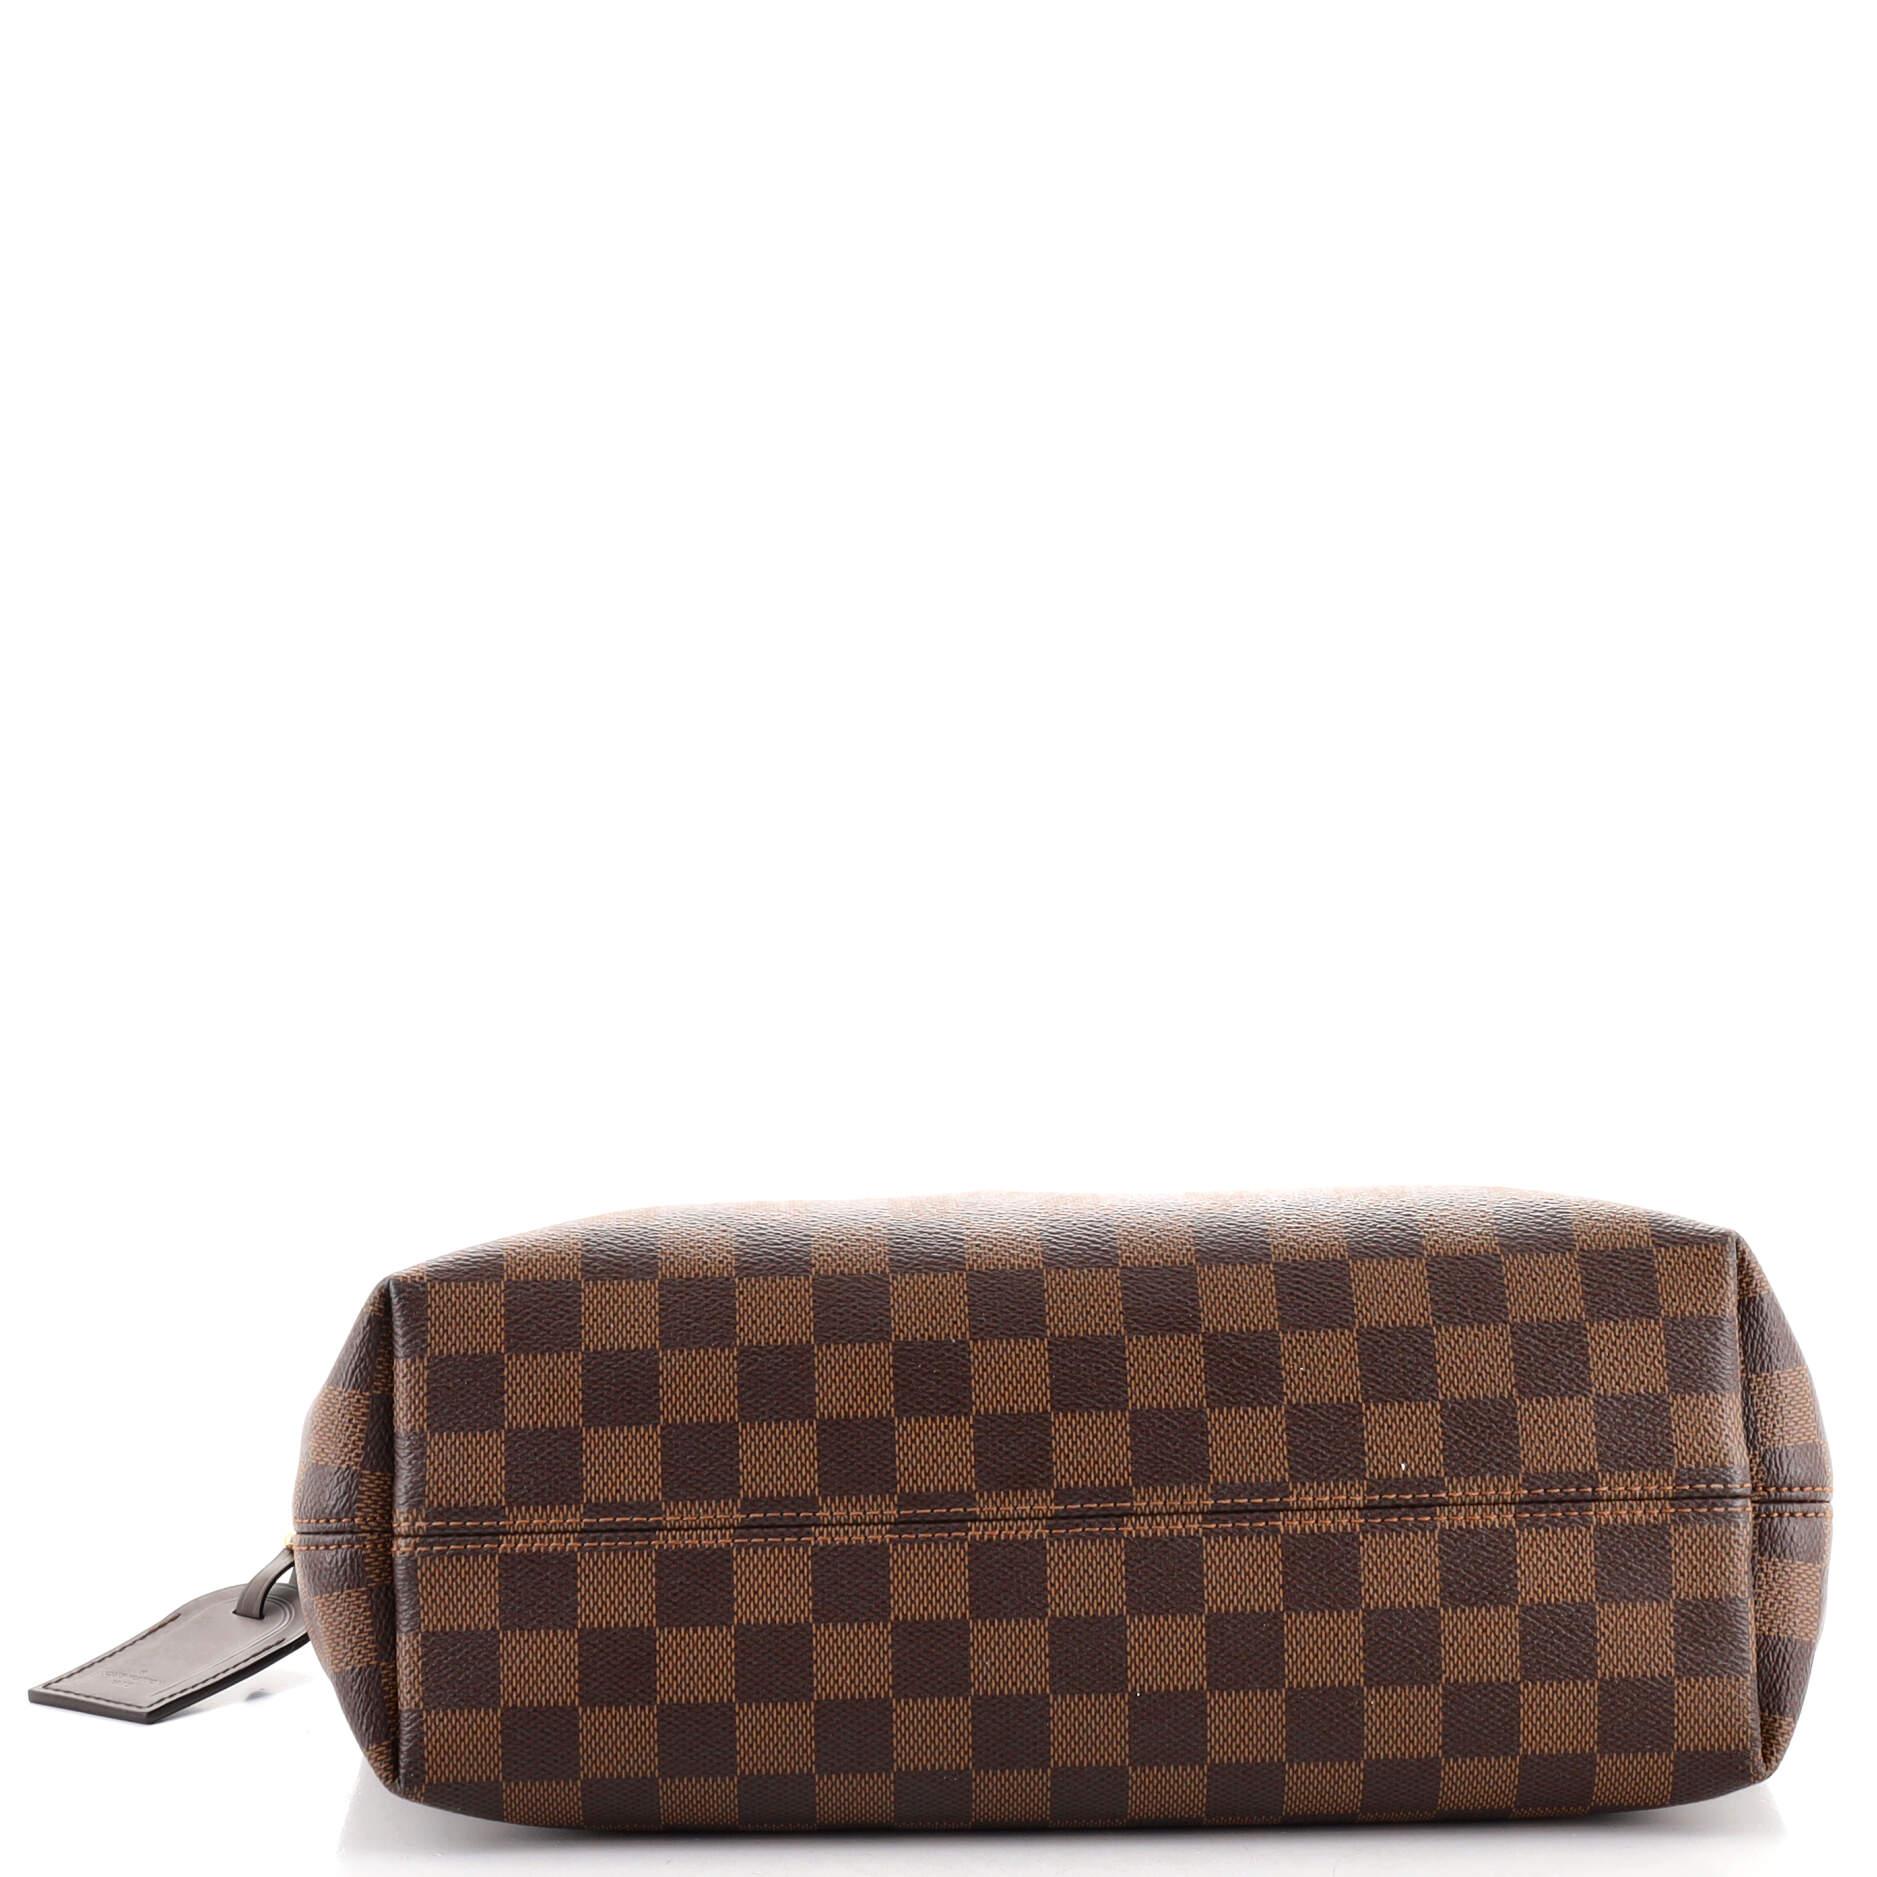 Women's or Men's Louis Vuitton Graceful Handbag Damier PM